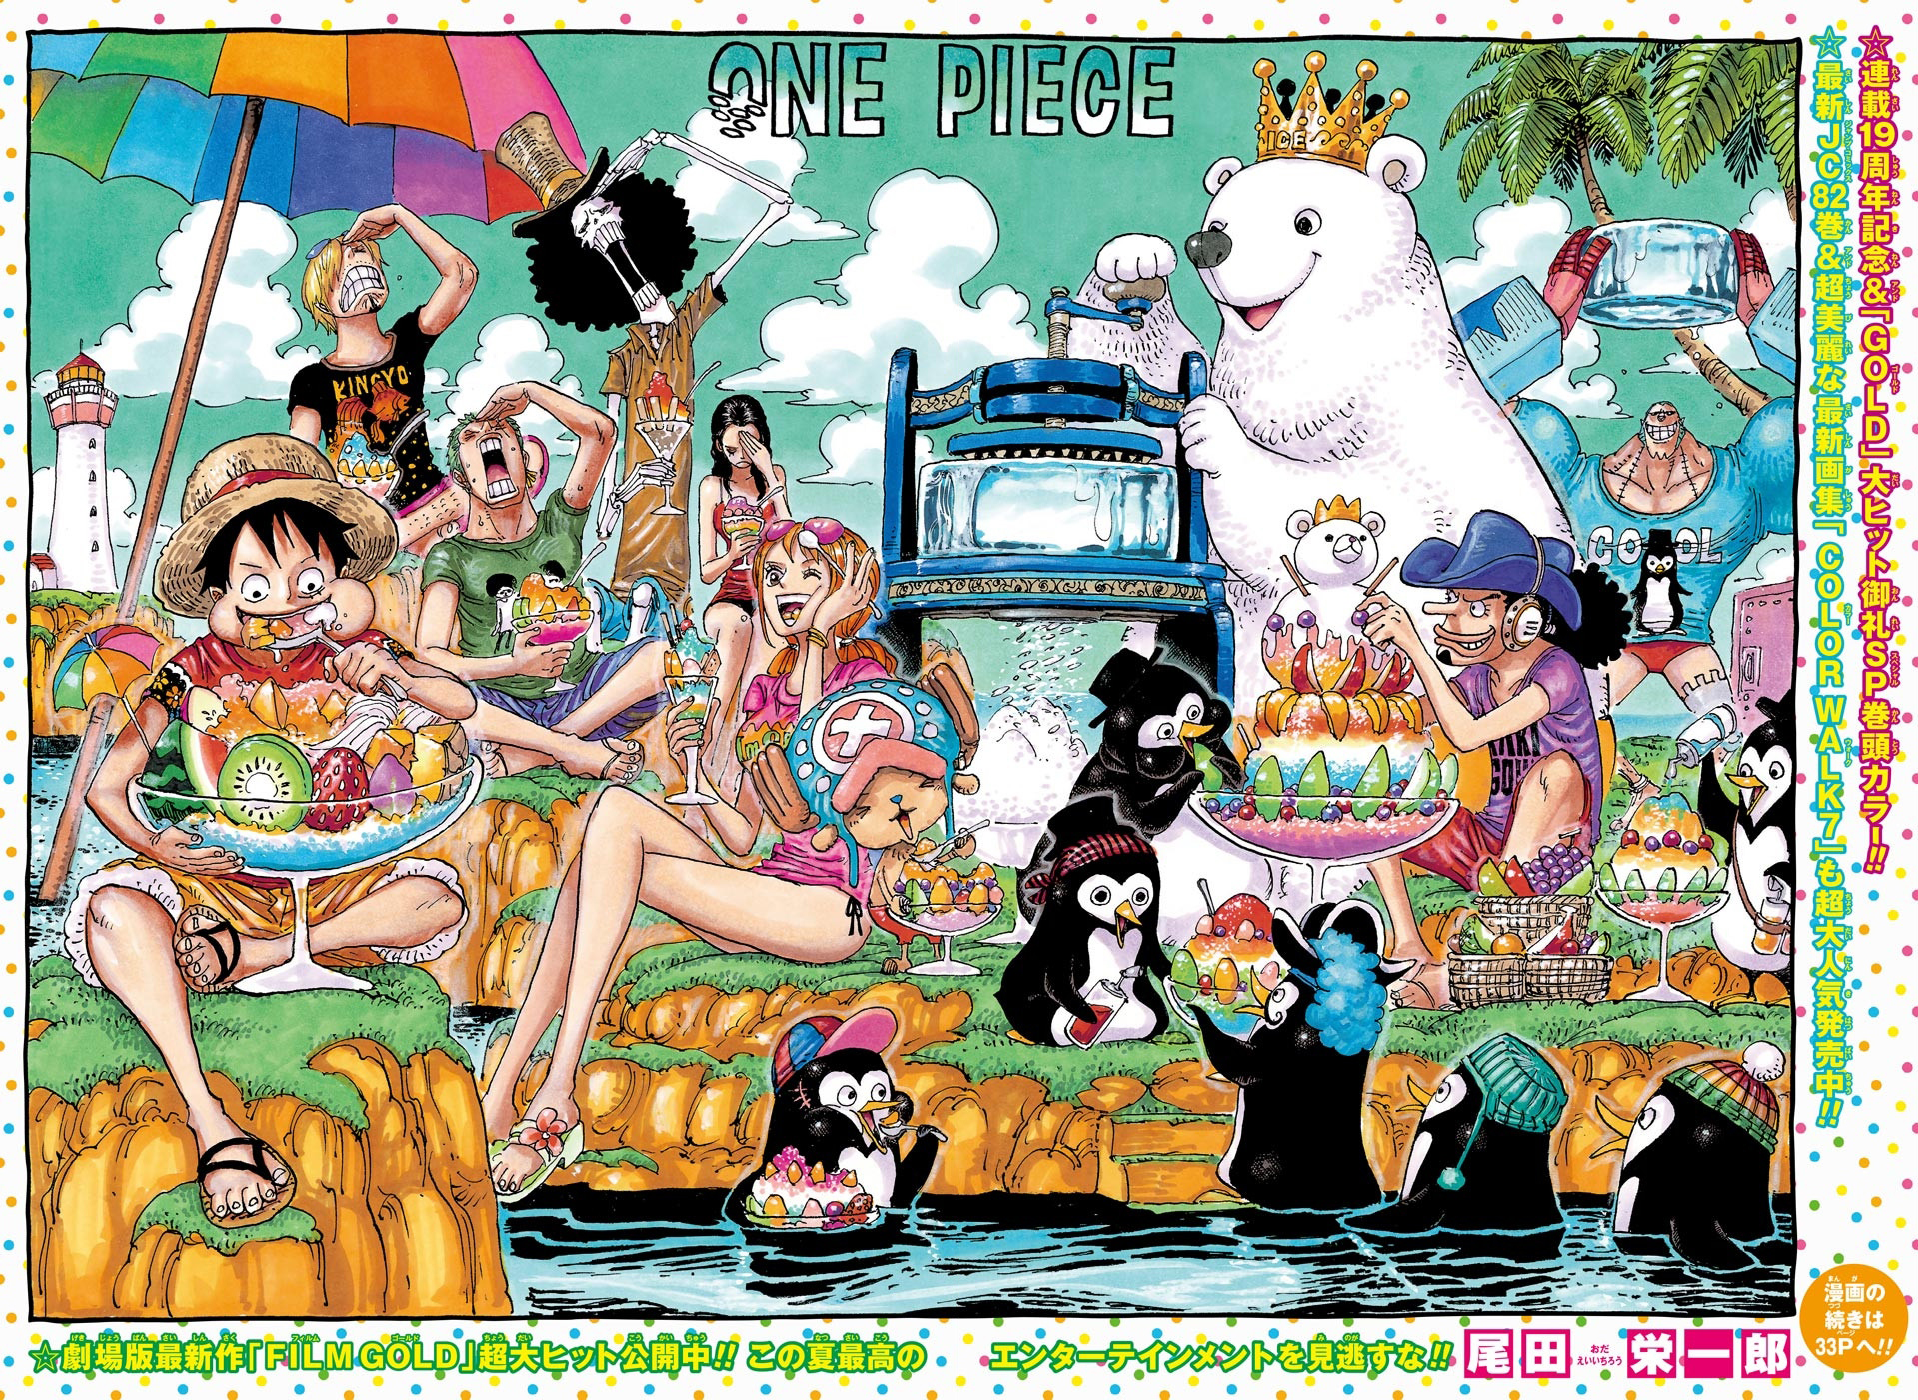 360p Uptobox One Piece Episode 878 Subtitle Indonesia Genflix Lanibraun